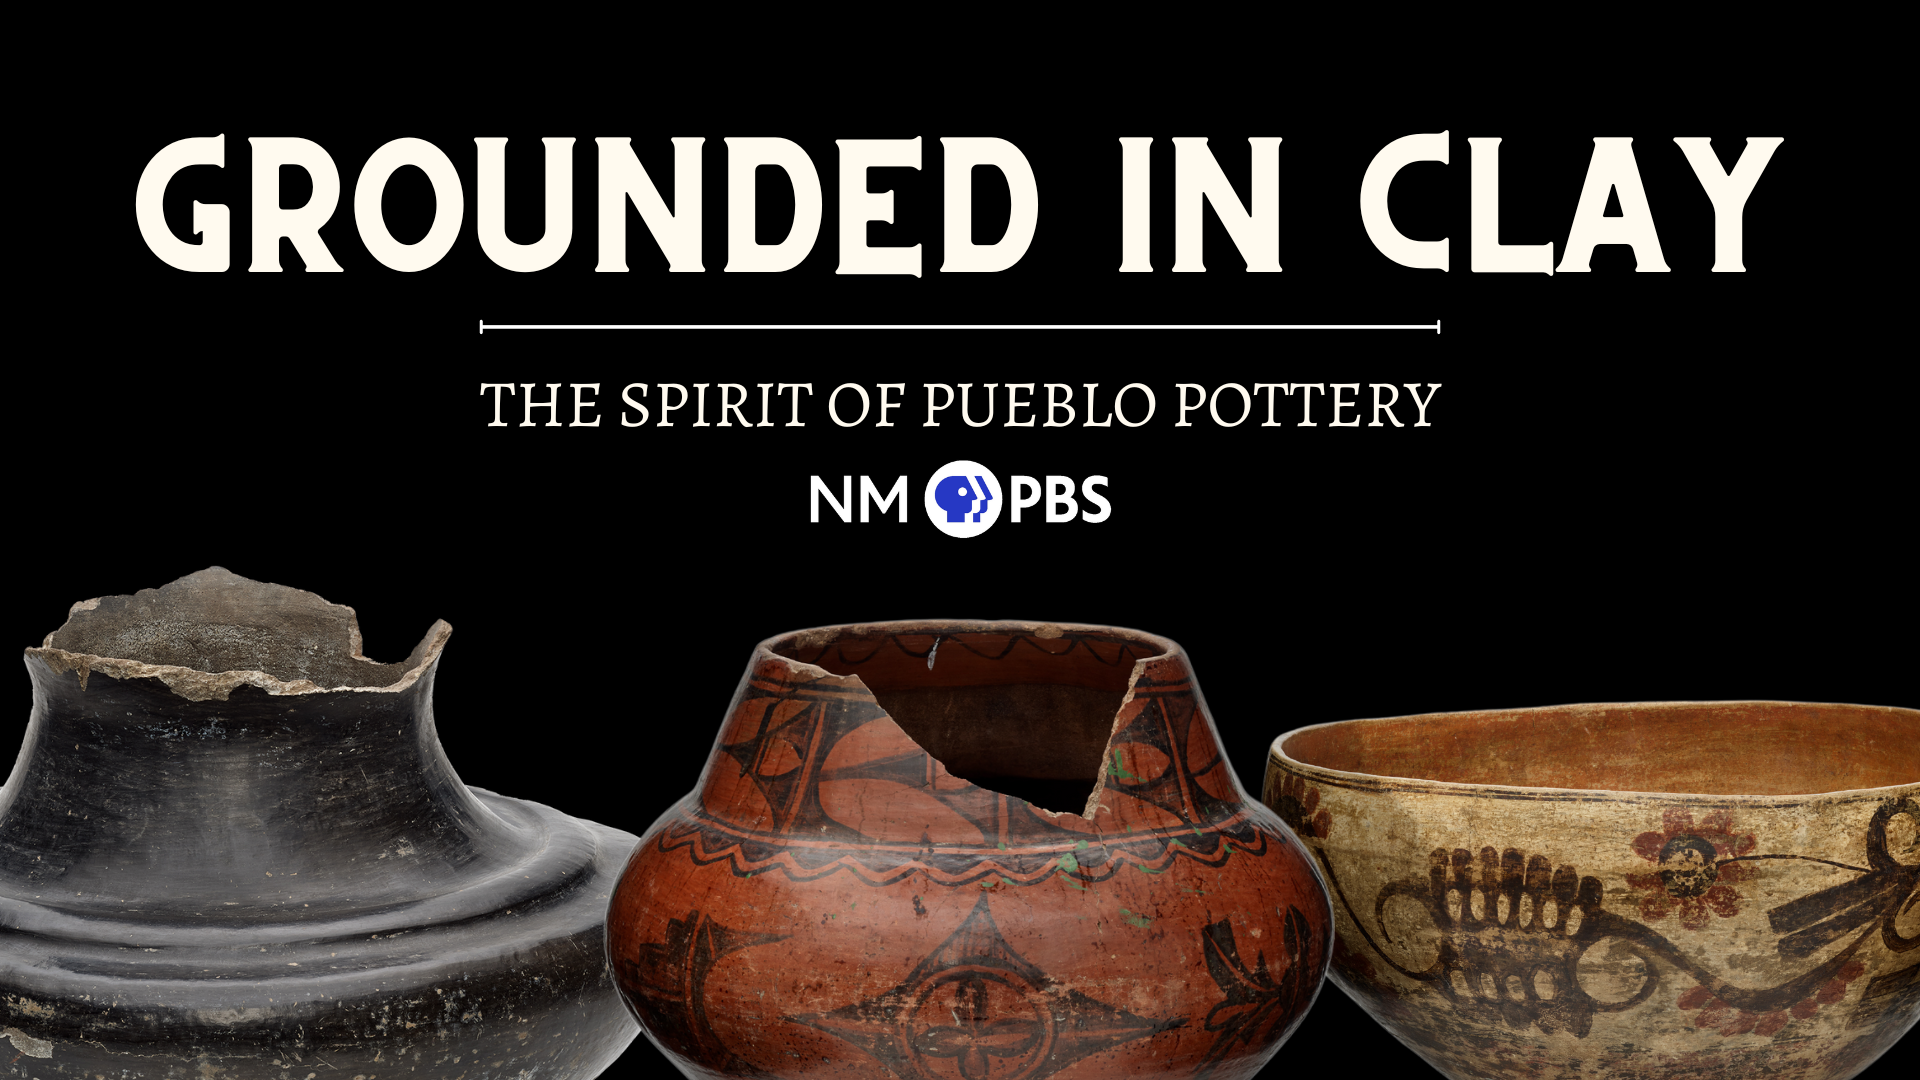 Prehistoric Pottery Kit - Southwest Region